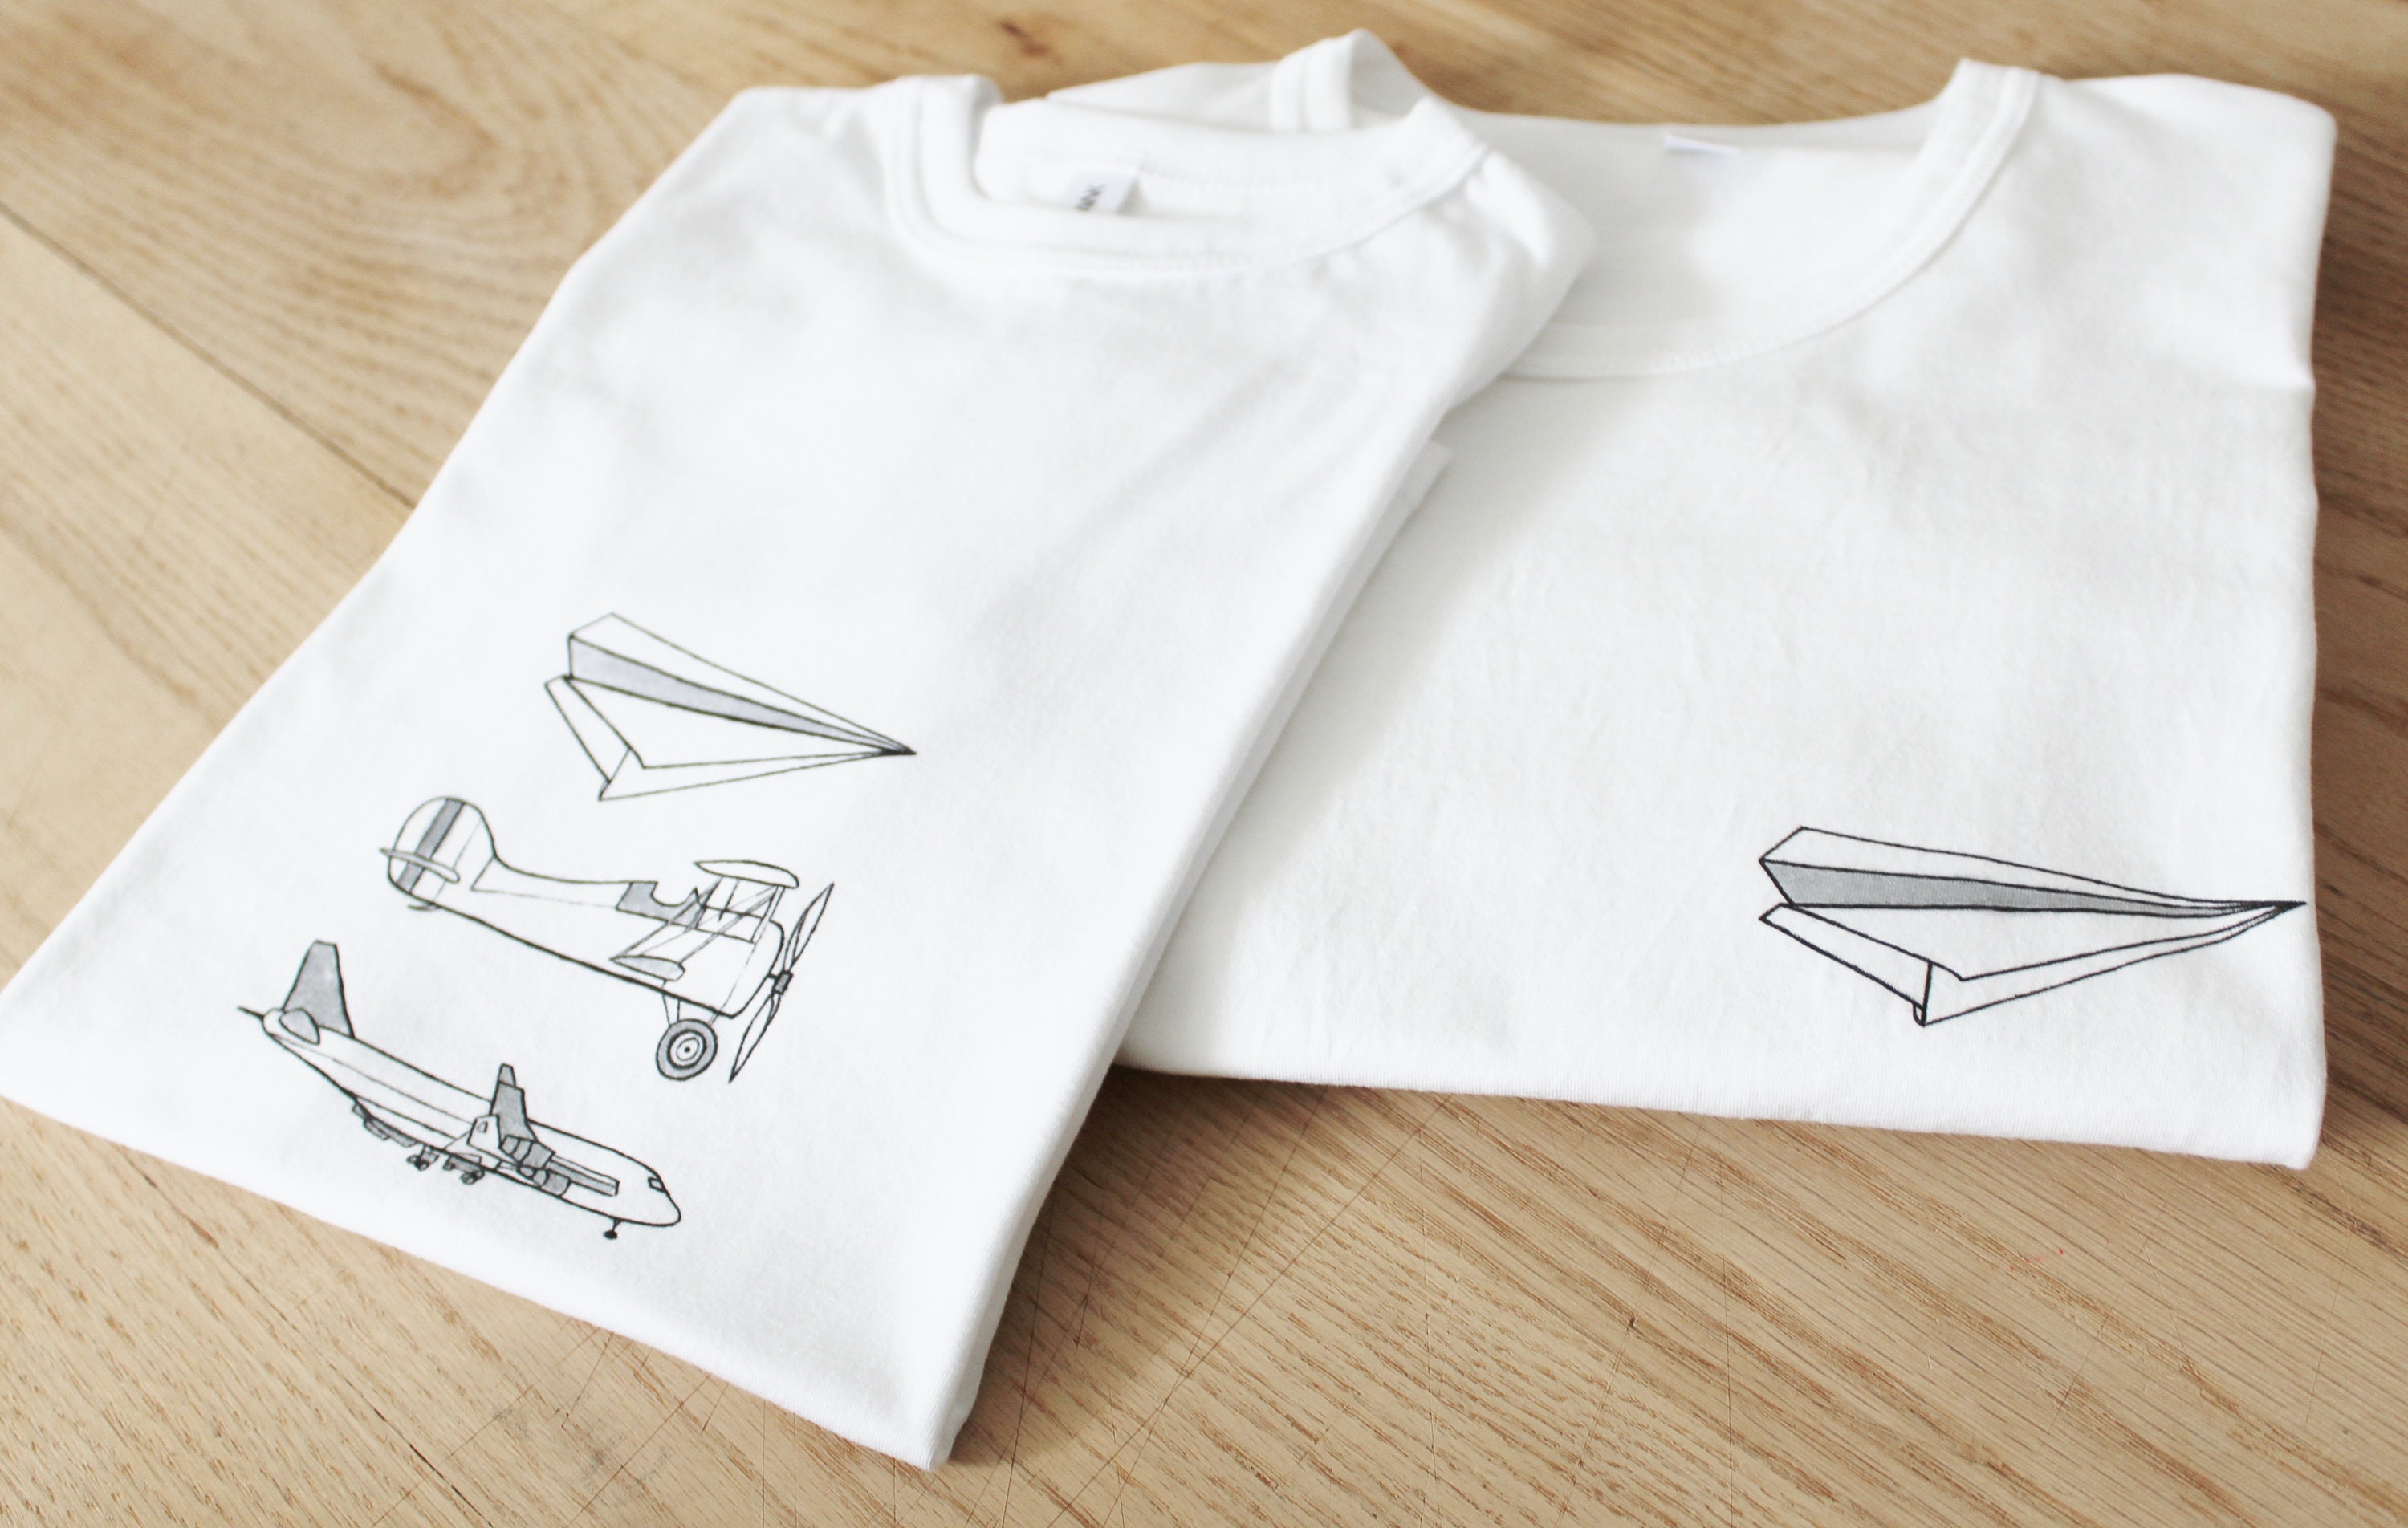 Paper Airplane Engineer Paper Plane Shirt - TeeUni